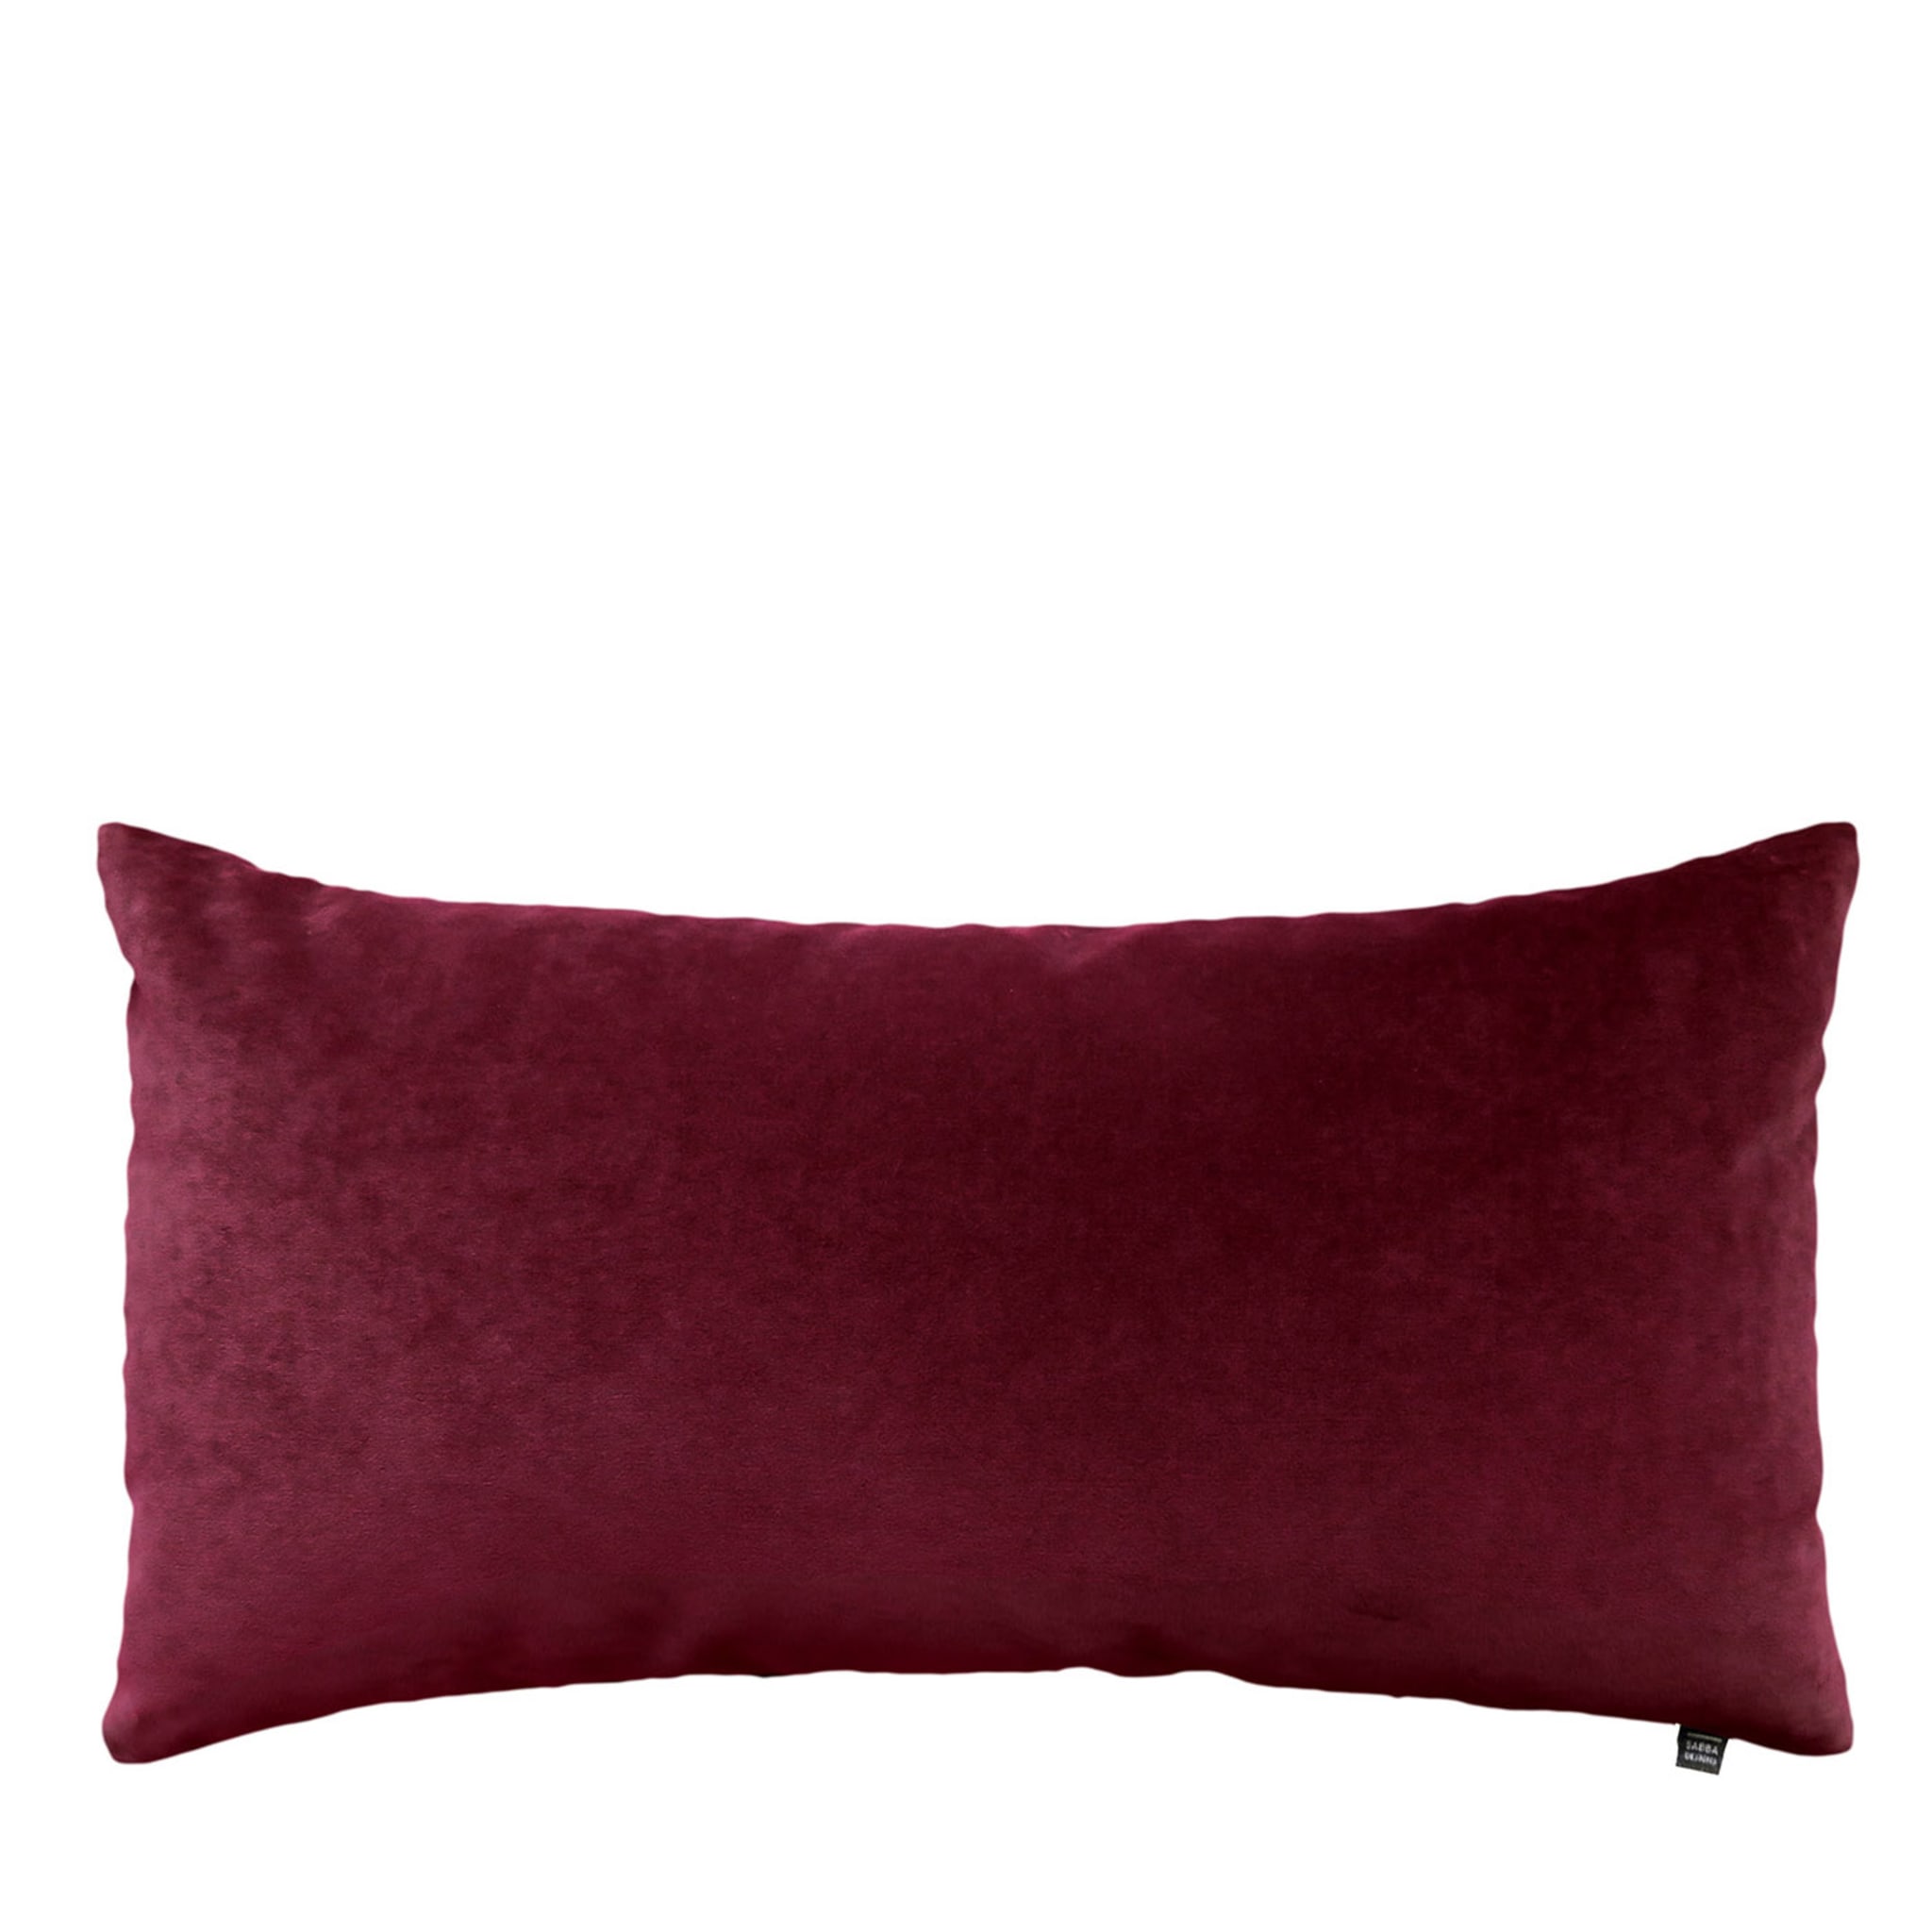 Burgundy Velvet Lumbar Cushion Cover - Main view